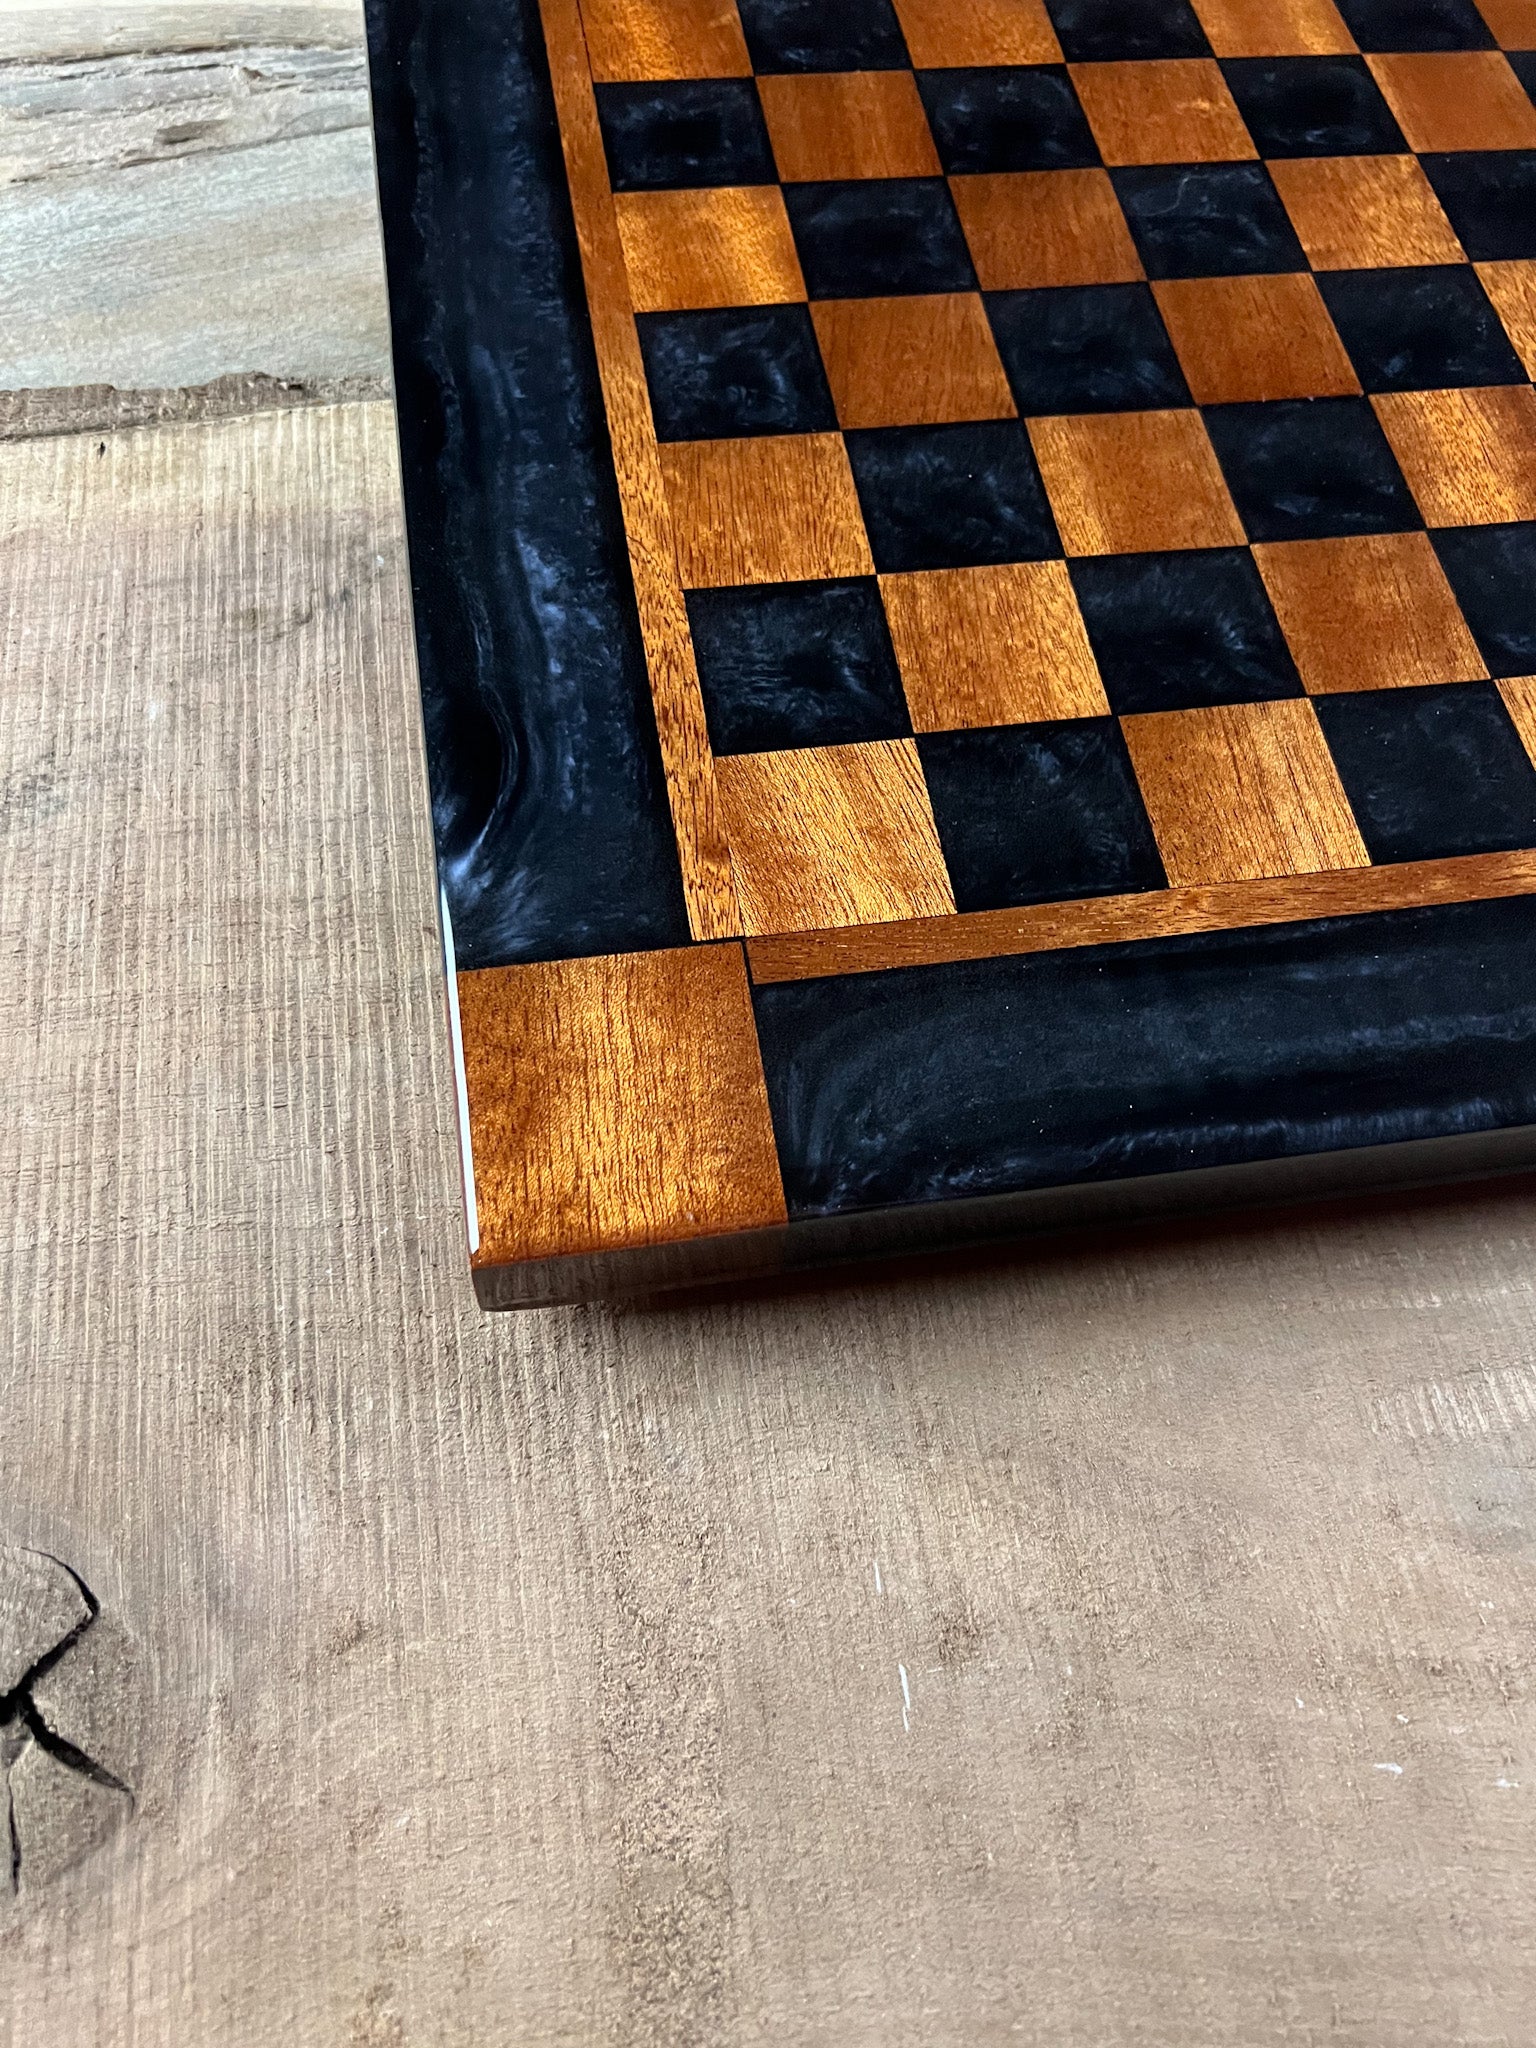 Exotic Brazilian Sipo Black Onyx Chess Board (With Border)